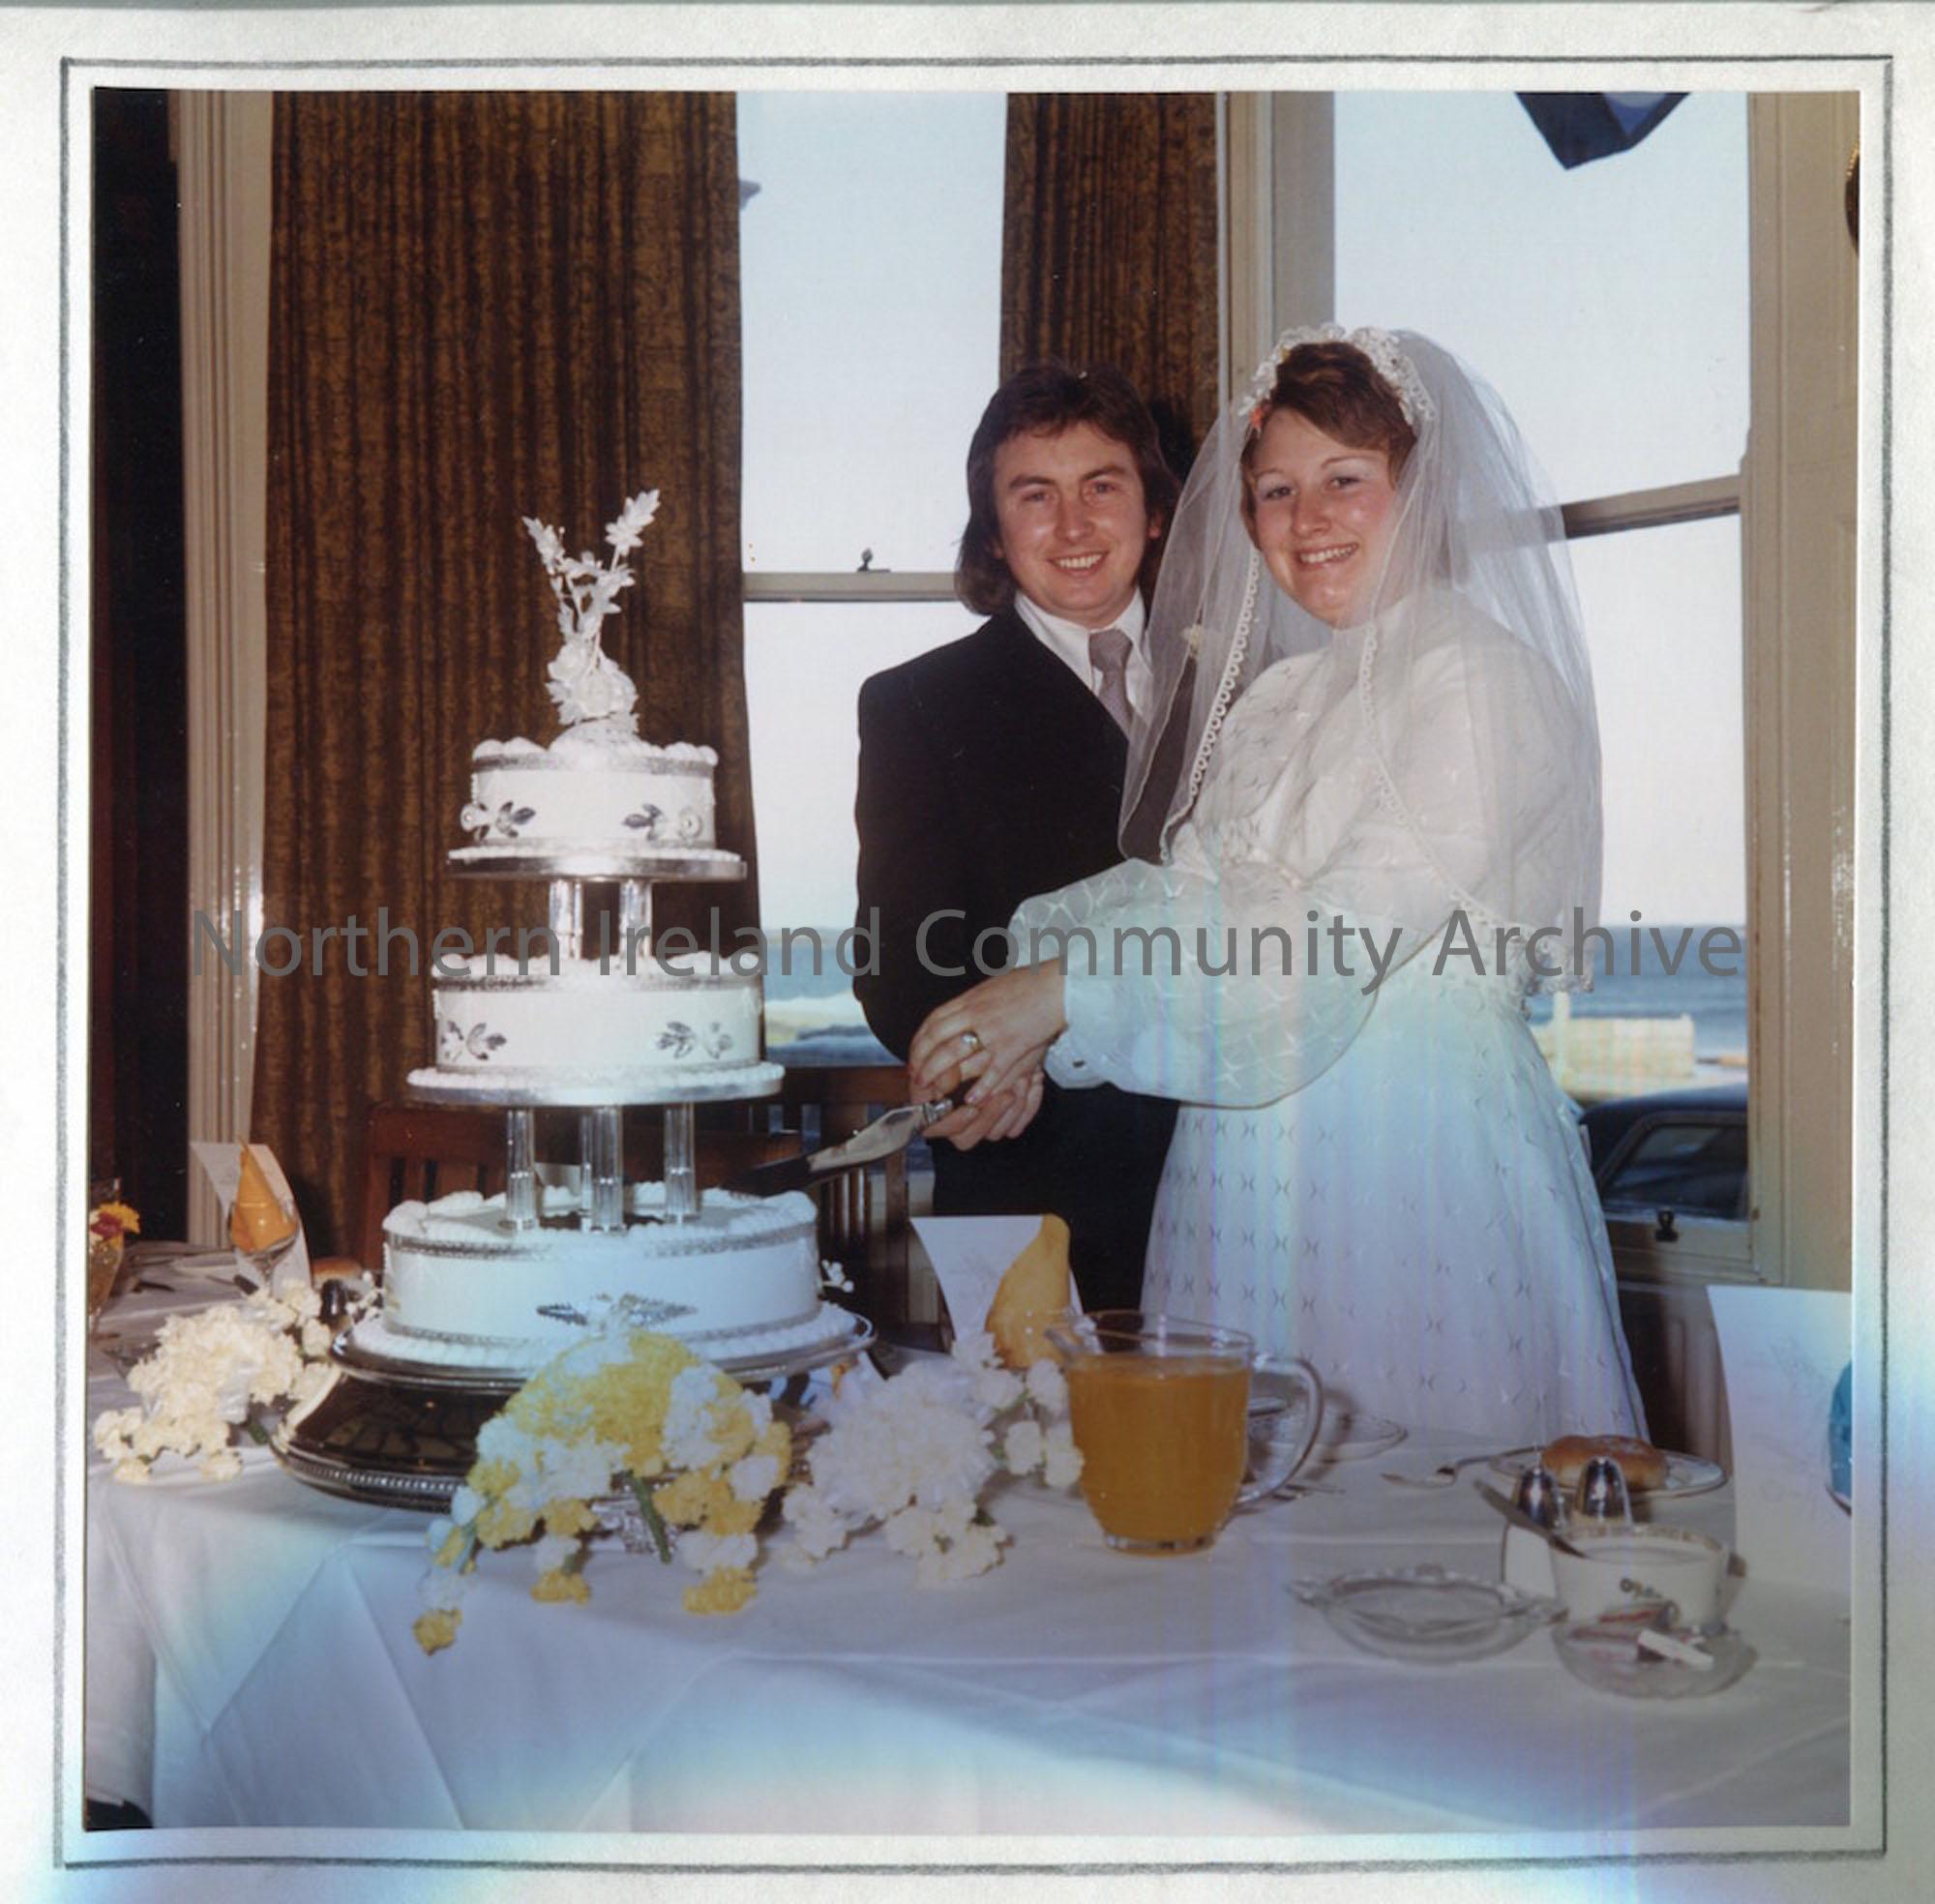 Anne and Philip Kennedy cut their wedding cake